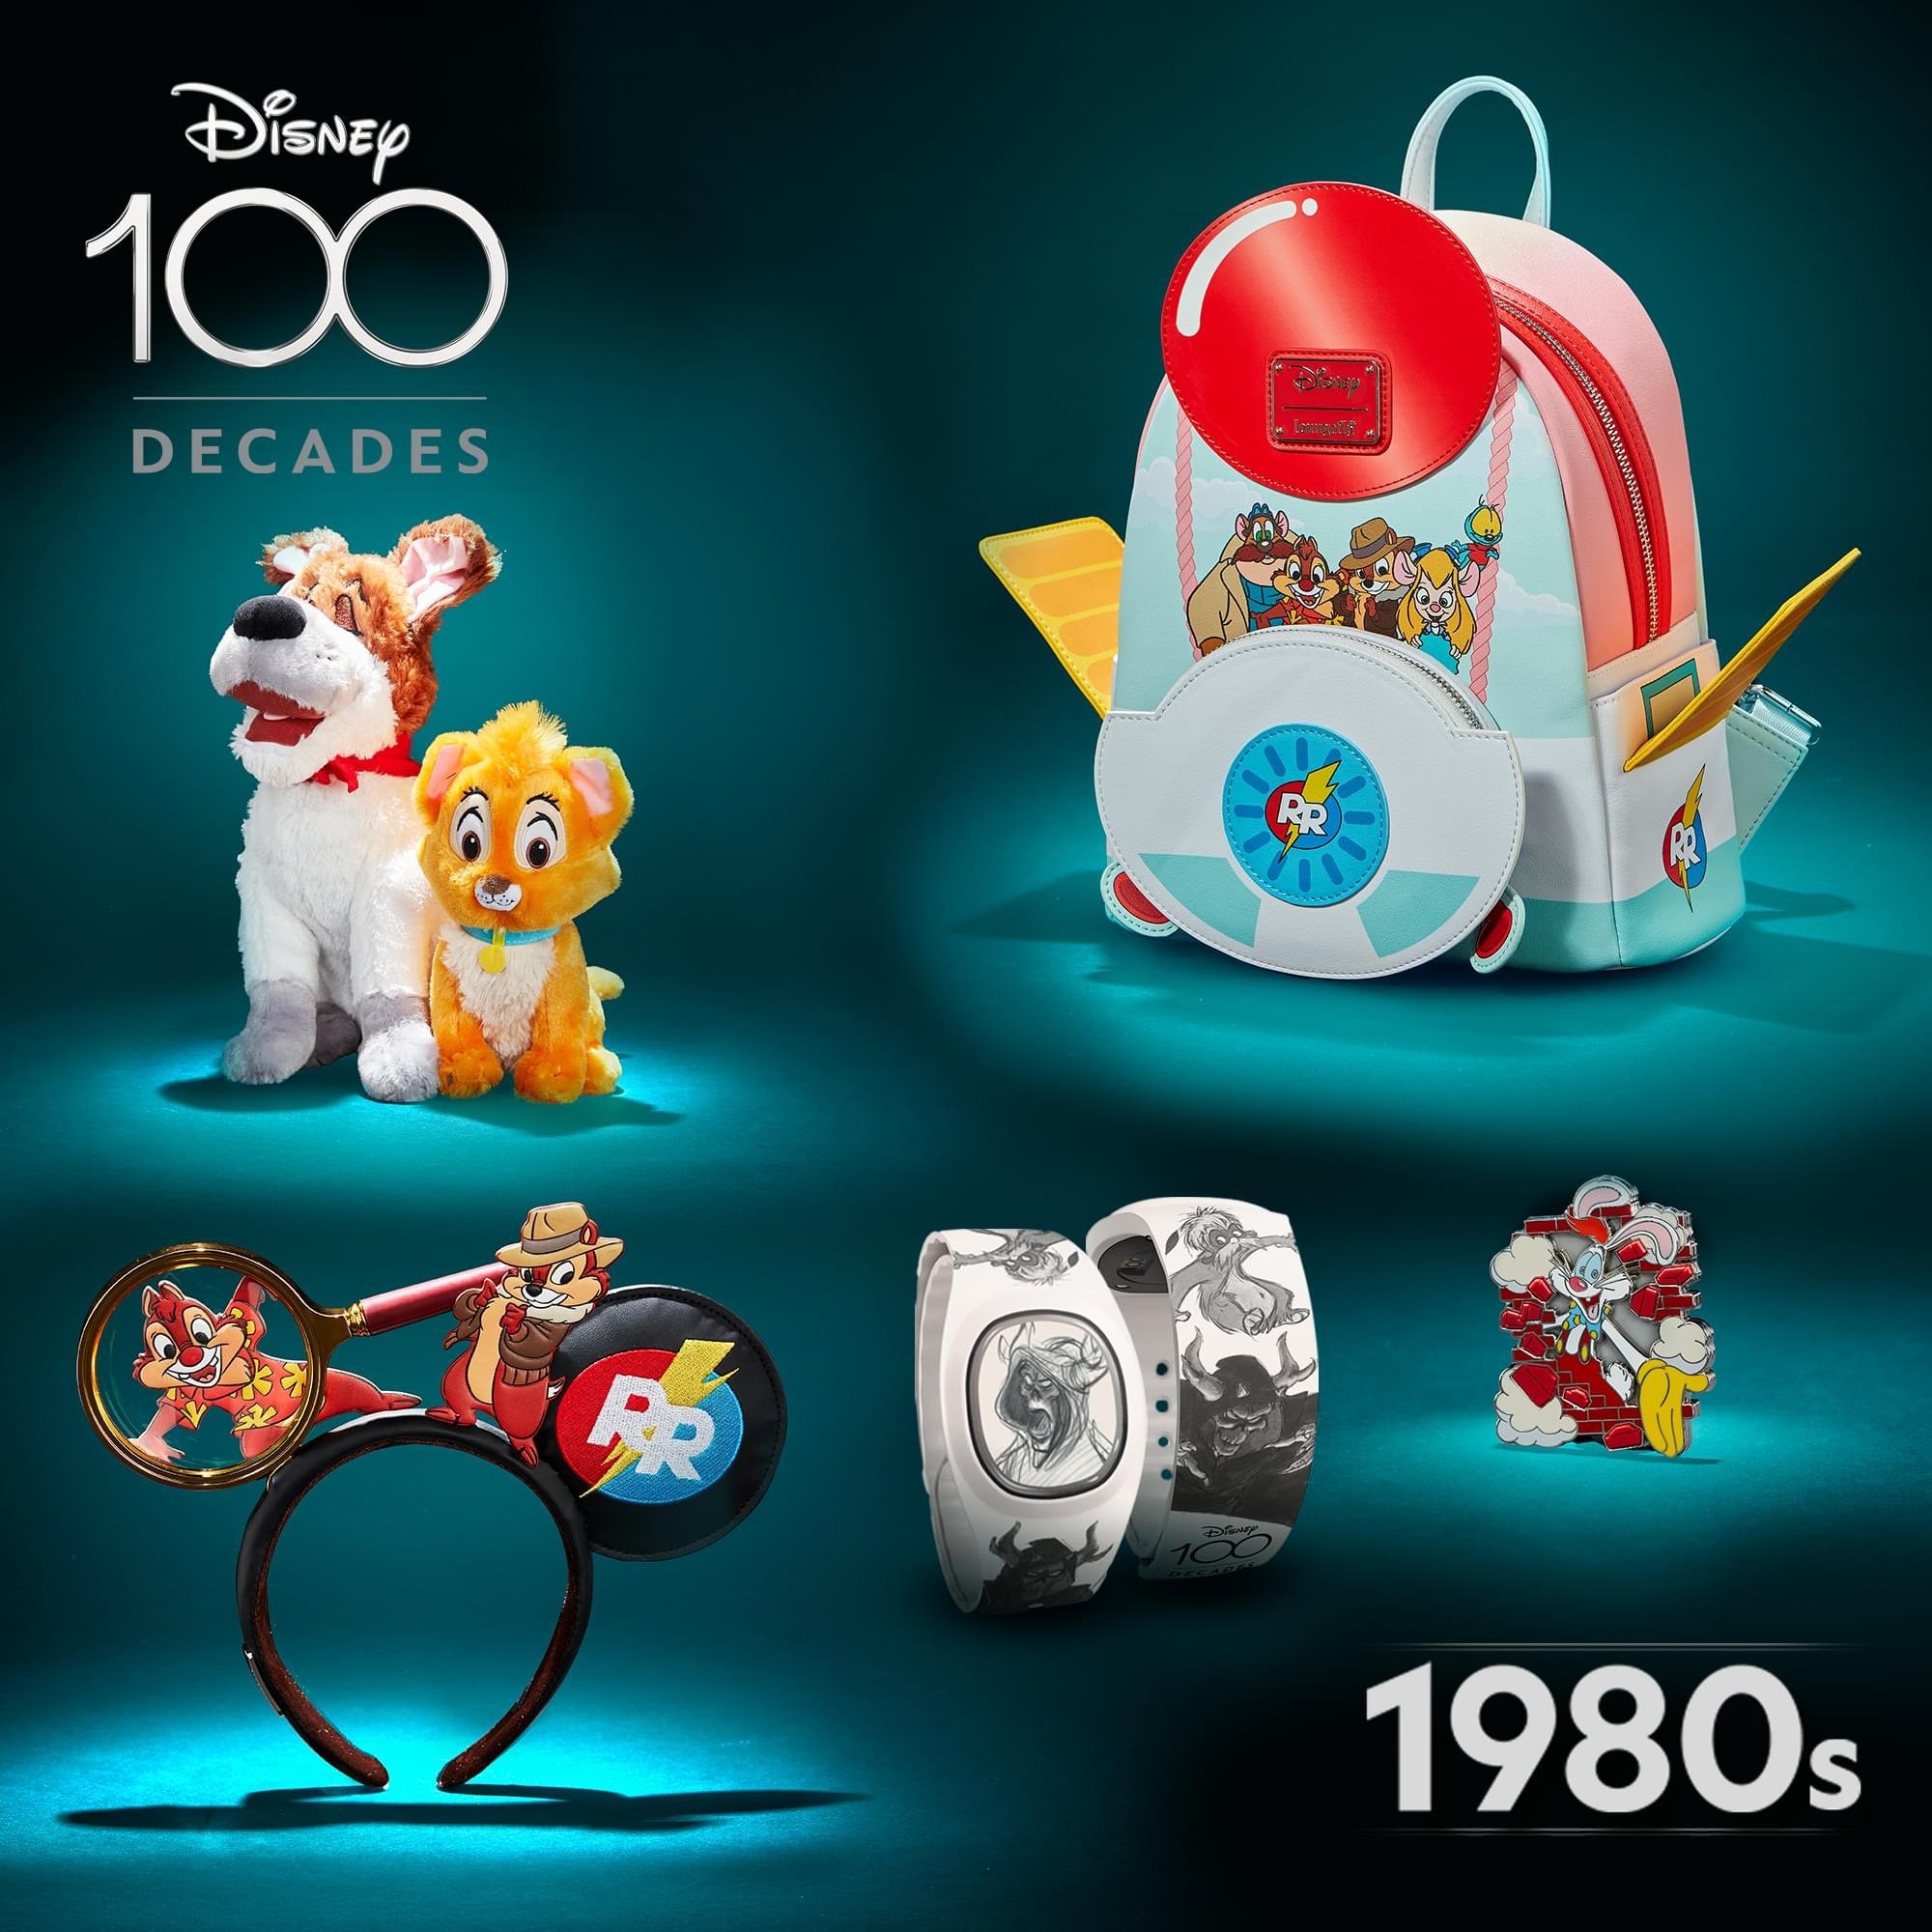 Disney100 Decades 1980s Collection on shopDisney — EXTRA MAGIC MINUTES